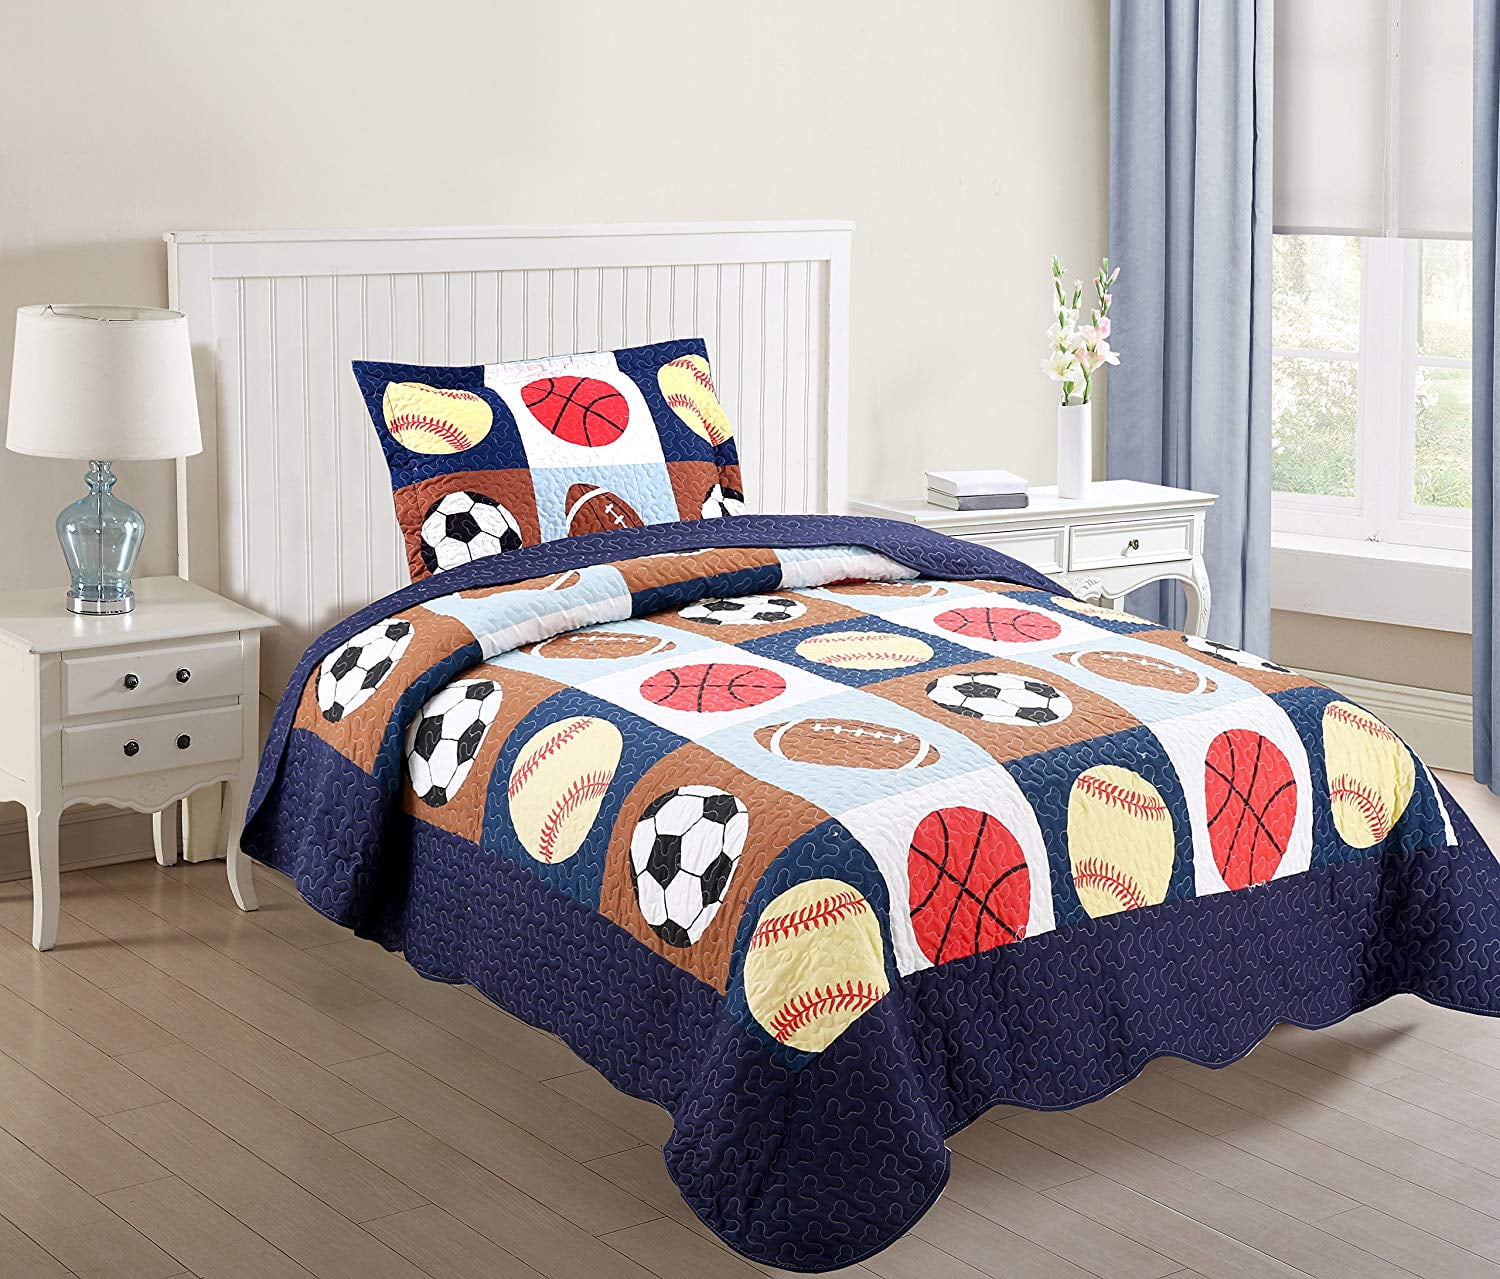 2pcs Kids Quilt Bedspread Comforter Set Throw Blanket for Boys Girls Elephant 